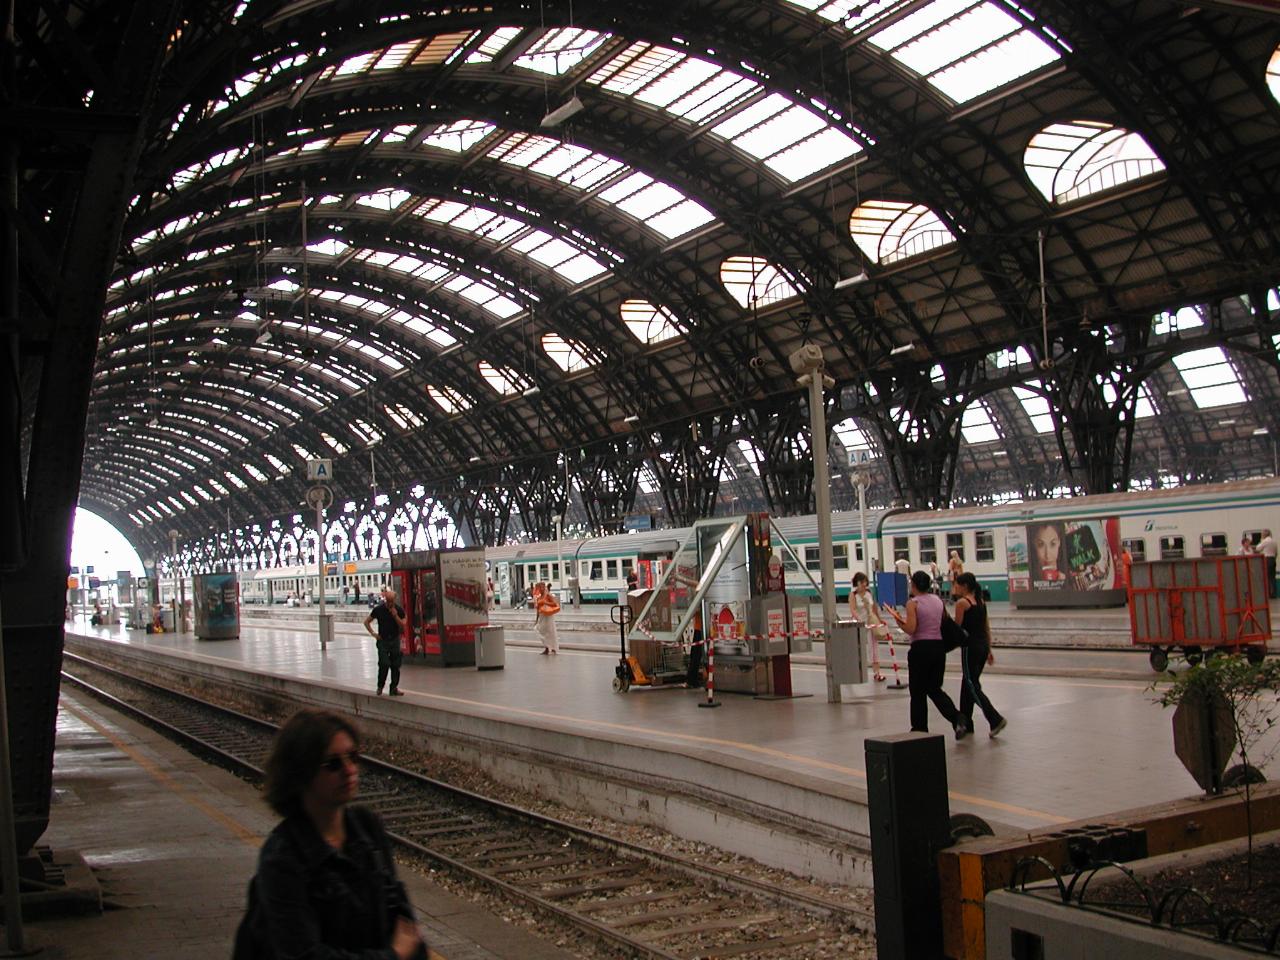 Milan's main train station